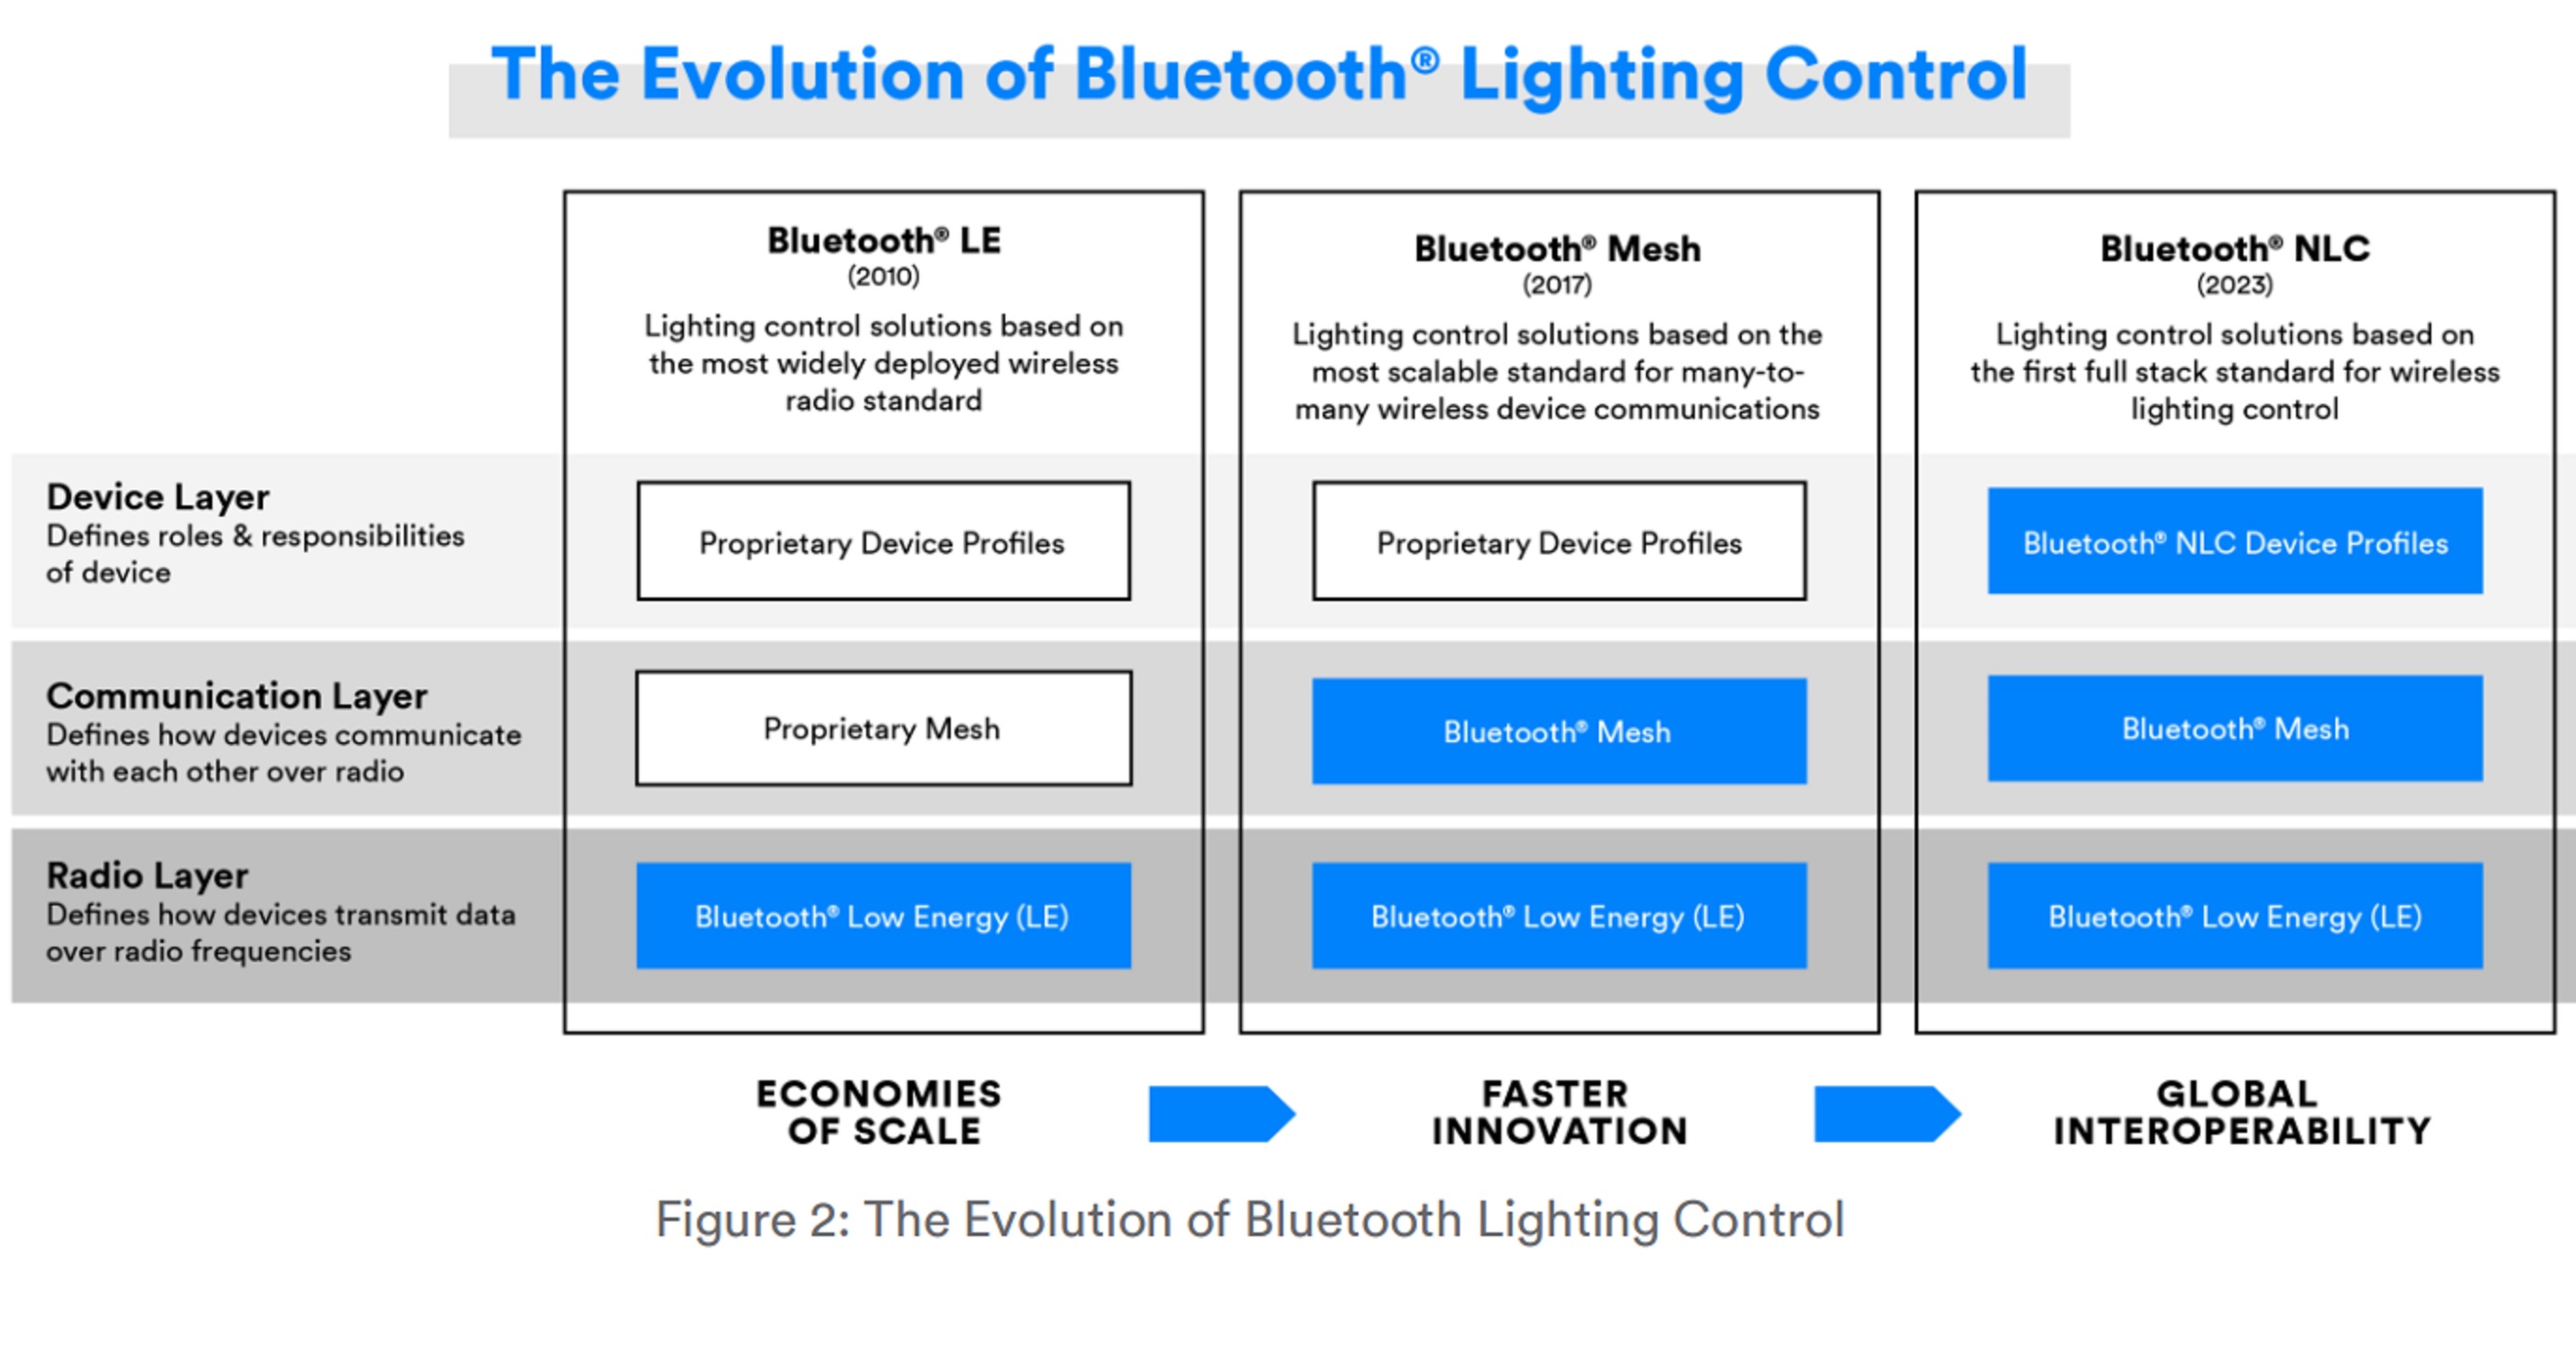 NLC Release_The Evolution of Bluetooth Lighting Control.jpg